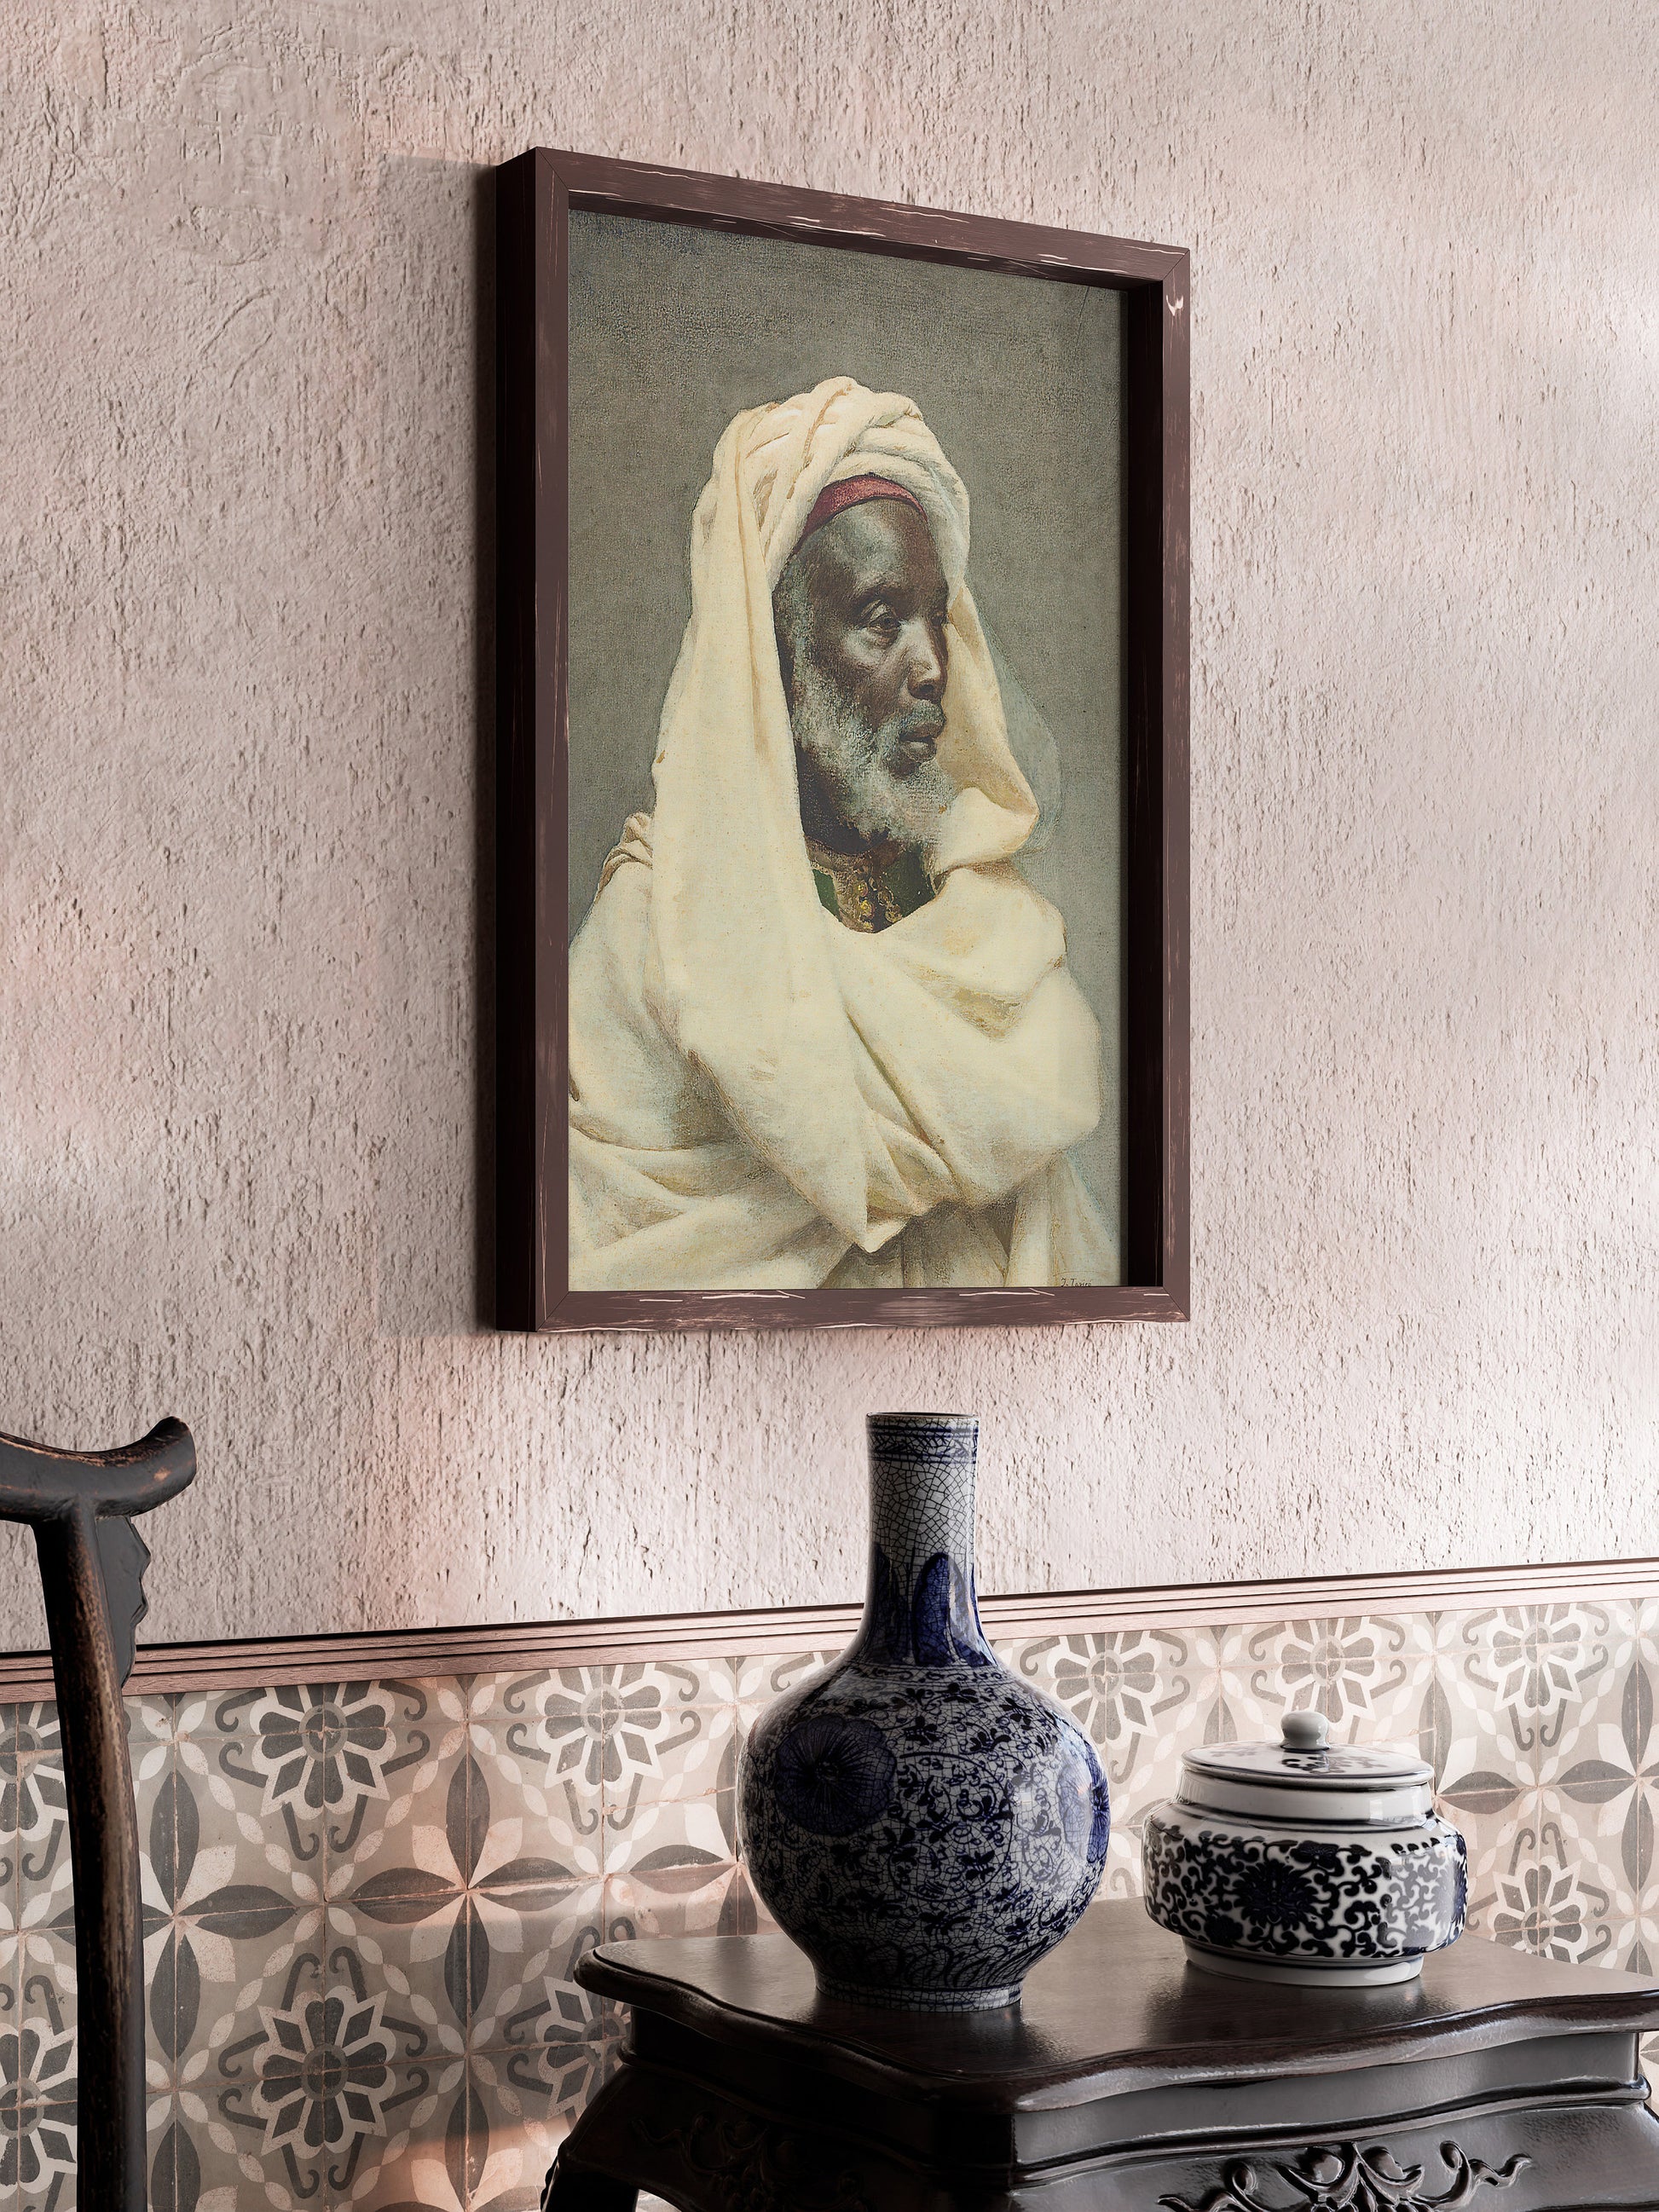 Josep Tapiró Baró Moorish Elder Orientalist Fine Art Famous Iconic Painting Vintage Ready to hang Framed Home Office Decor Print Gift Idea